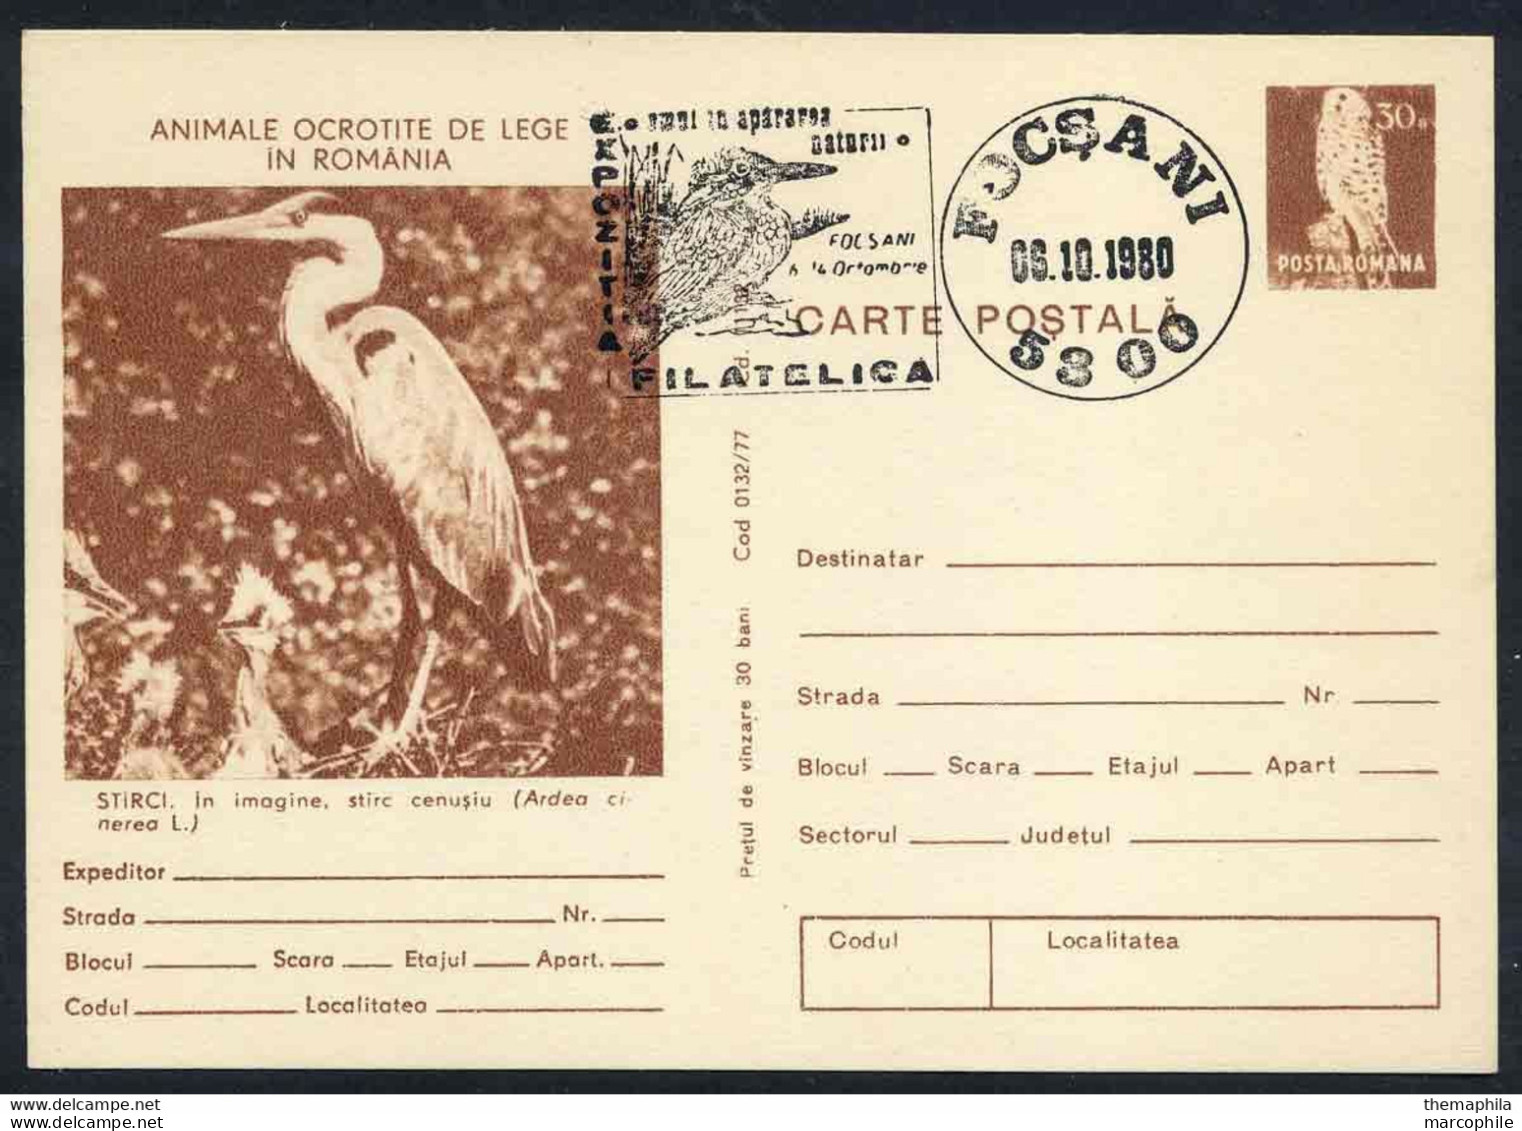 HERON CENDRE - PELICANIDE - ARDEA CINEREA / 1980 ROUMANIE ENTIER POSTAL ILLUSTRE (ref 739a) - Pelikanen